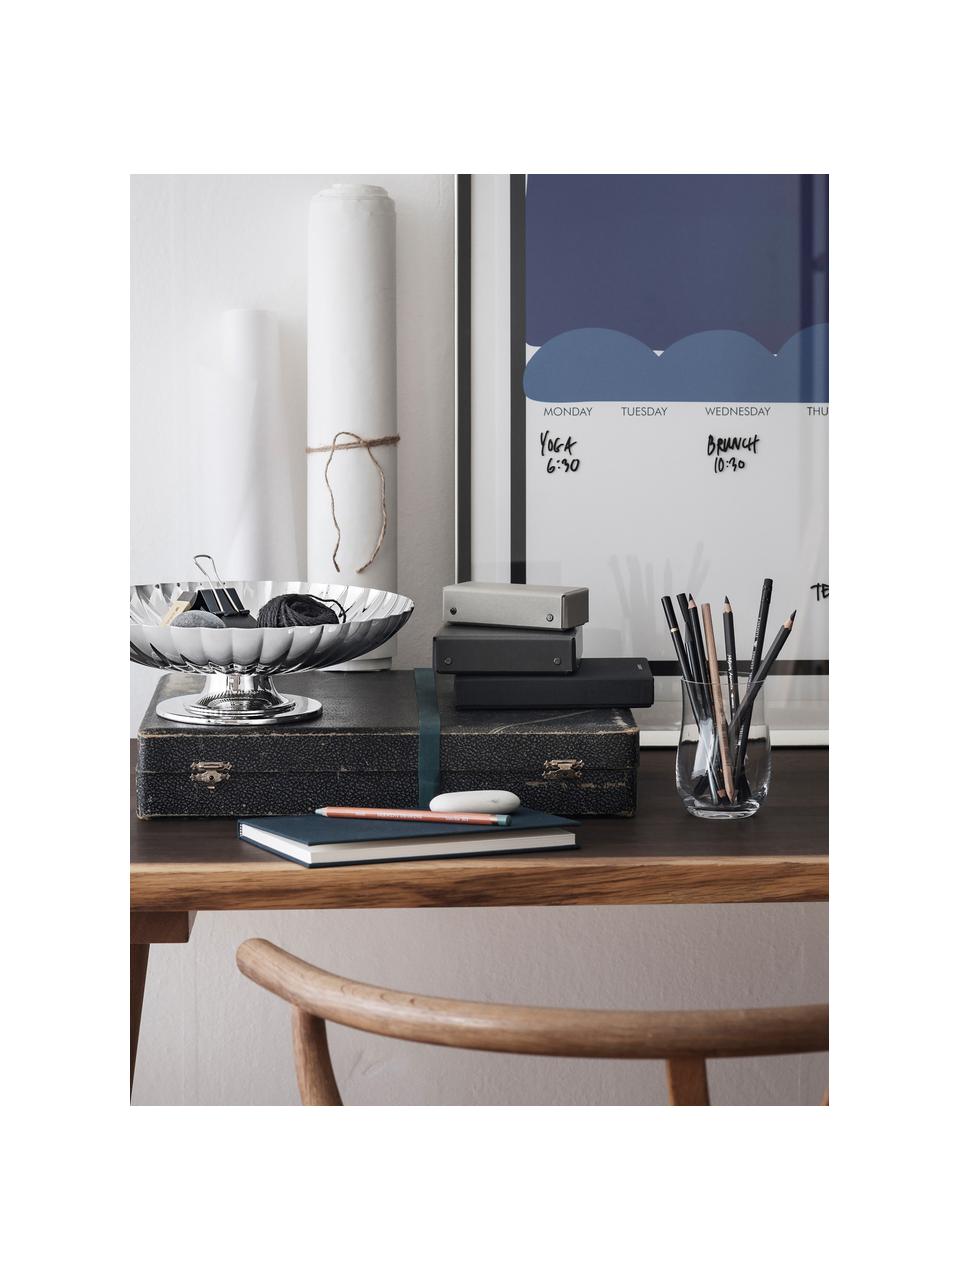 Edelstahl-Servierschale Bernadotte mit Rillenstruktur, Edelstahl, poliert, Silberfarben, hochglanzpoliert, Ø 28 x H 9 cm